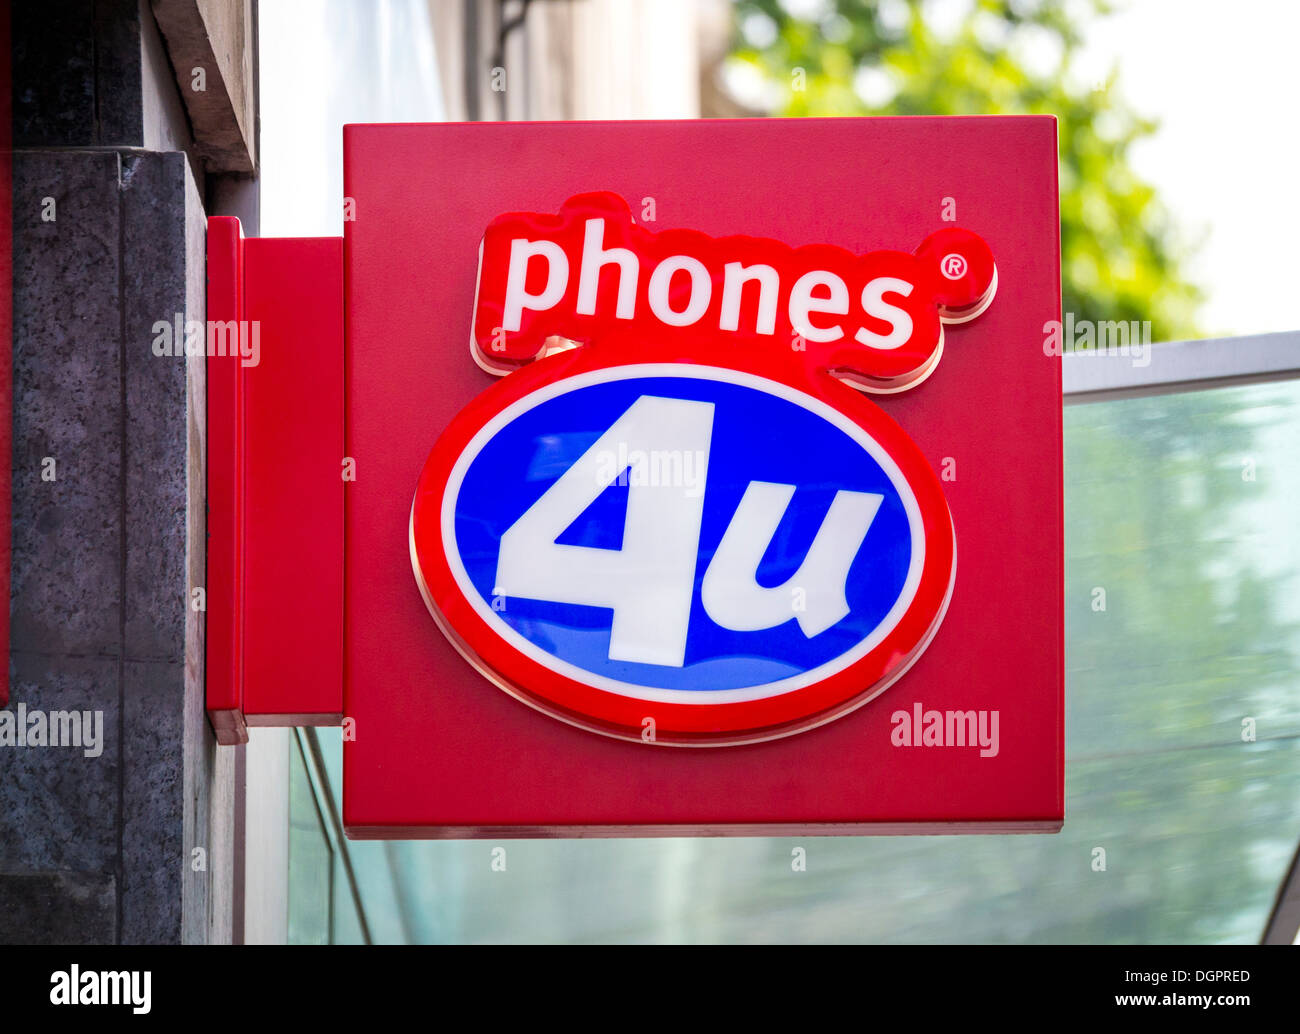 Phones 4u Mobile Phone Shop Sign. Stock Photo